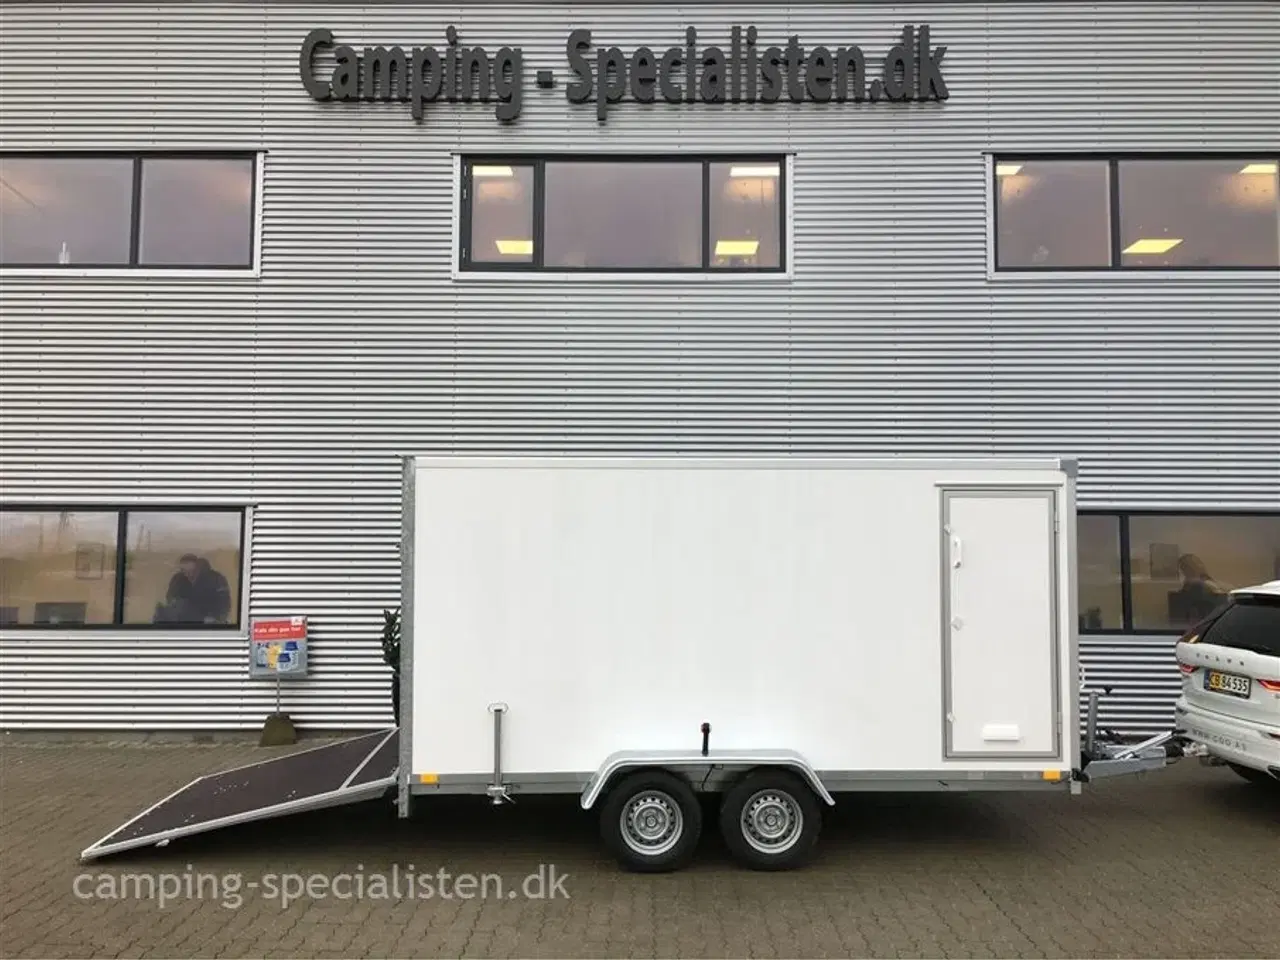 Billede 1 - 2024 - Selandia Cargotrailer Stor 2541 HT 2500 kg    Ny Cargo trailer 2x4 meter Model 2024  Camping-Specialisten.dk Silkeborg og Arhus